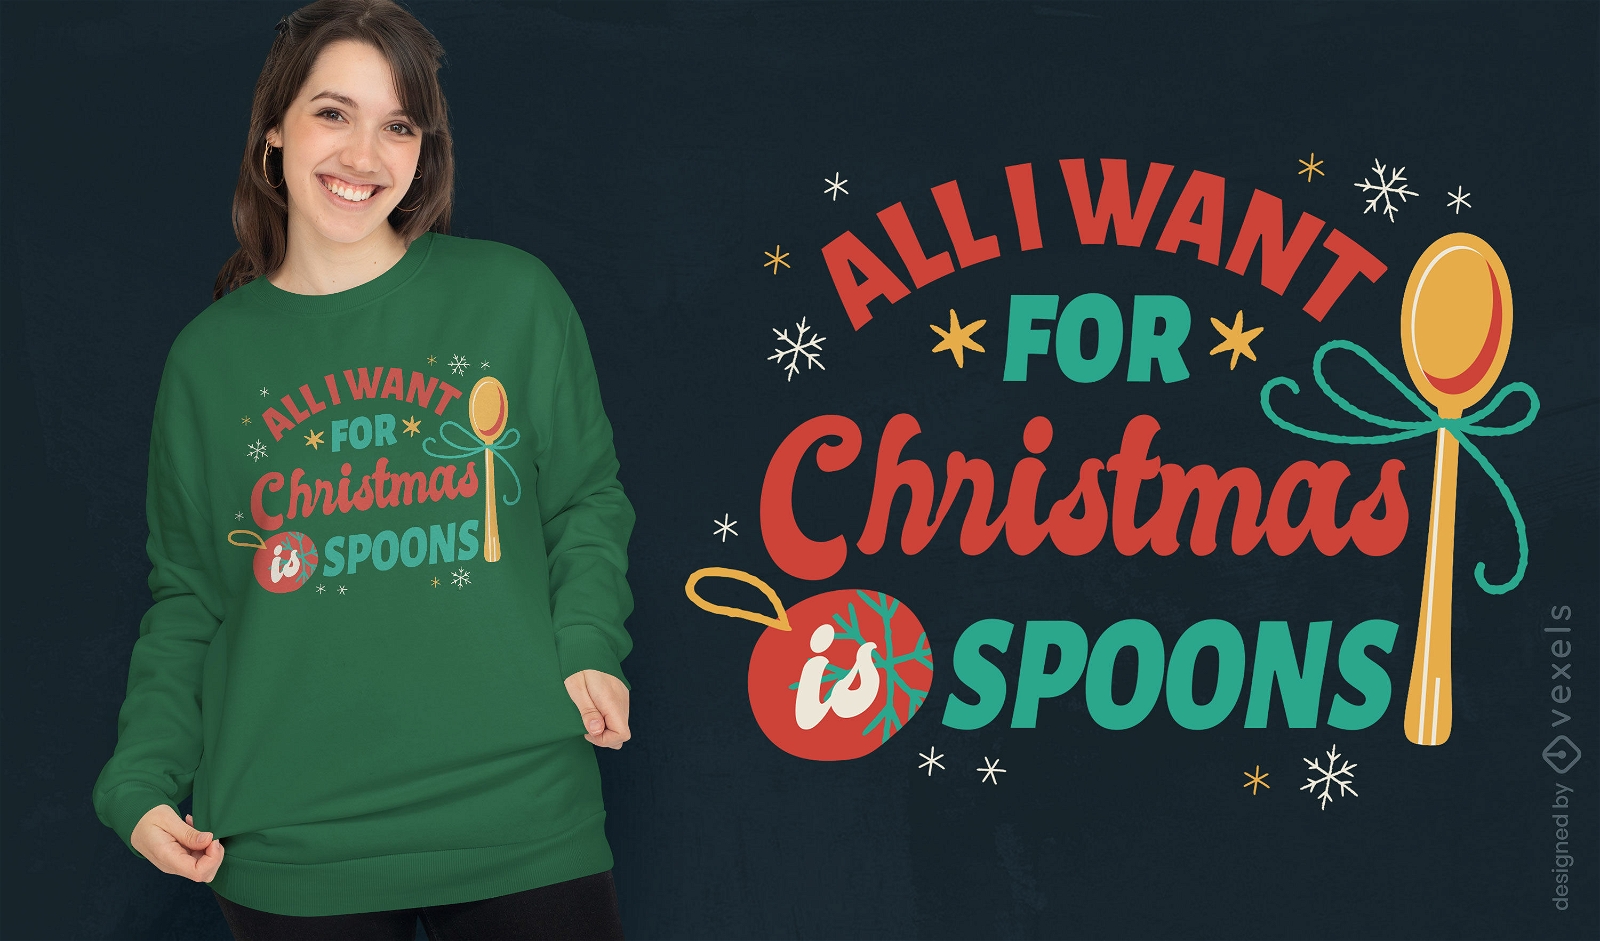 Spoons for Christmas t-shirt design